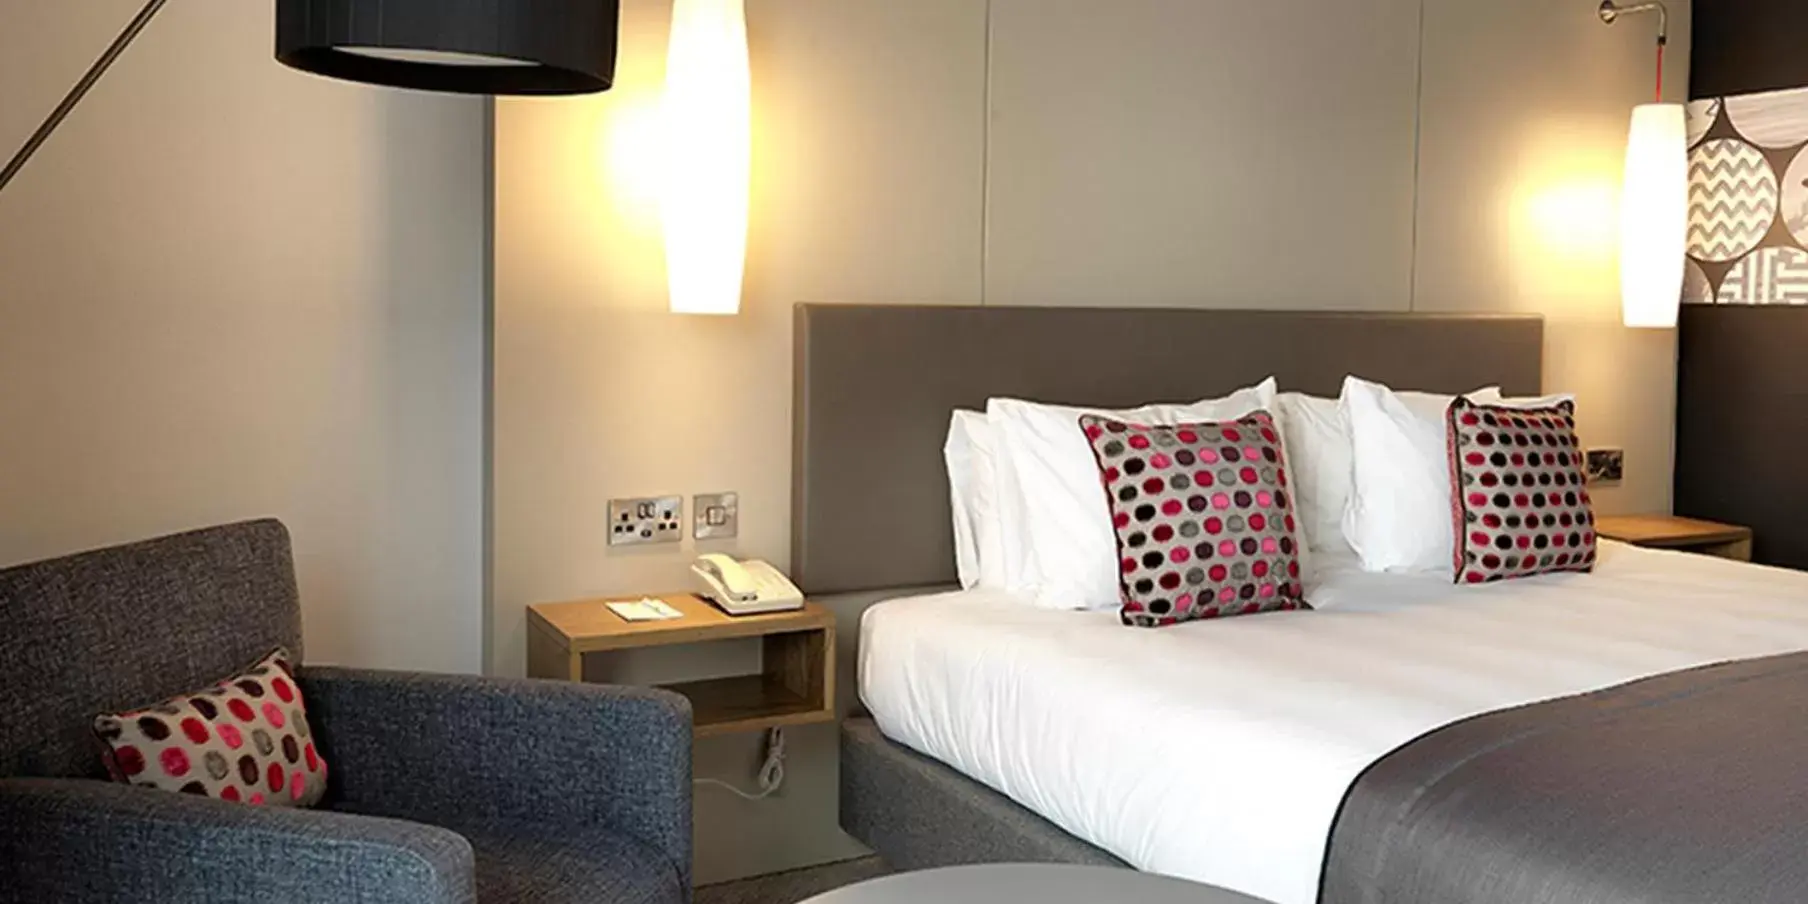 Bed, Room Photo in Crowne Plaza Harrogate, an IHG Hotel